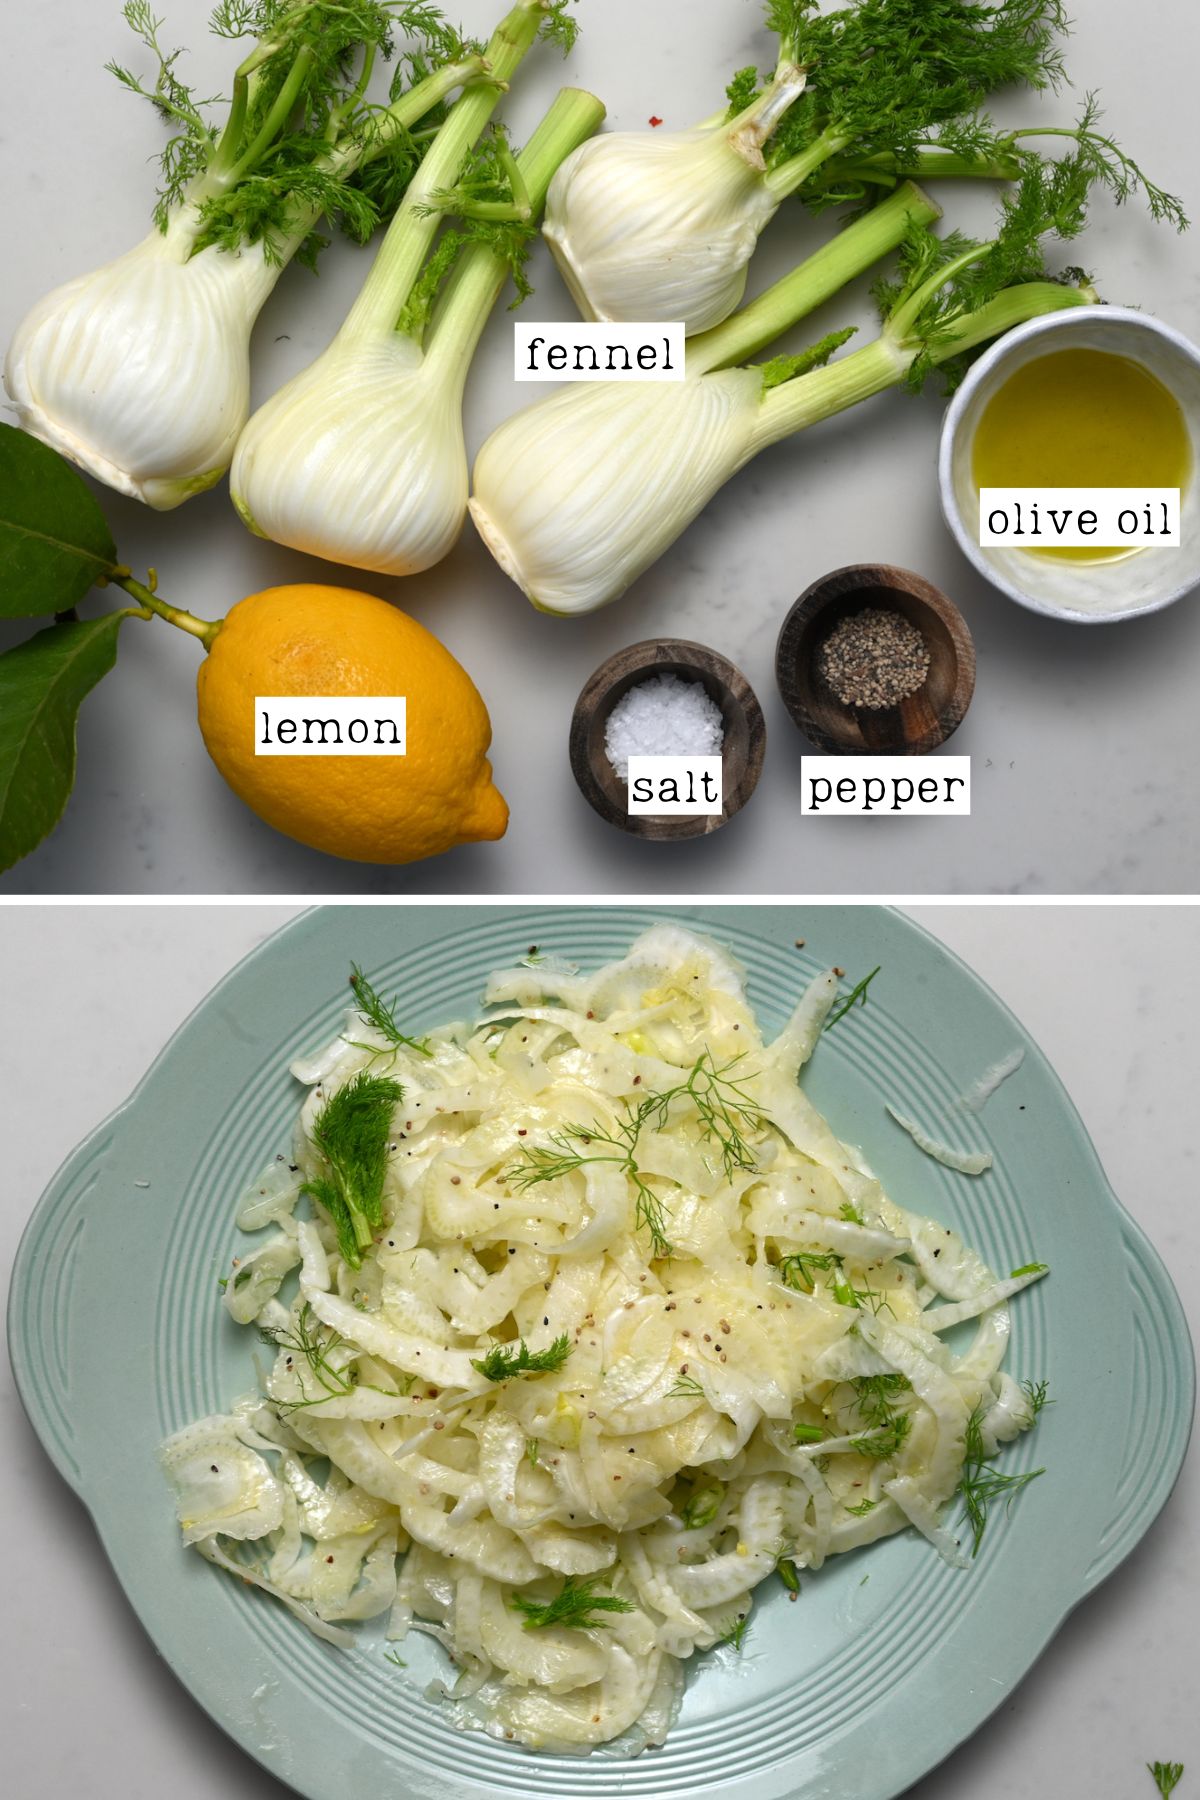 Ingredients for raw fennel salad